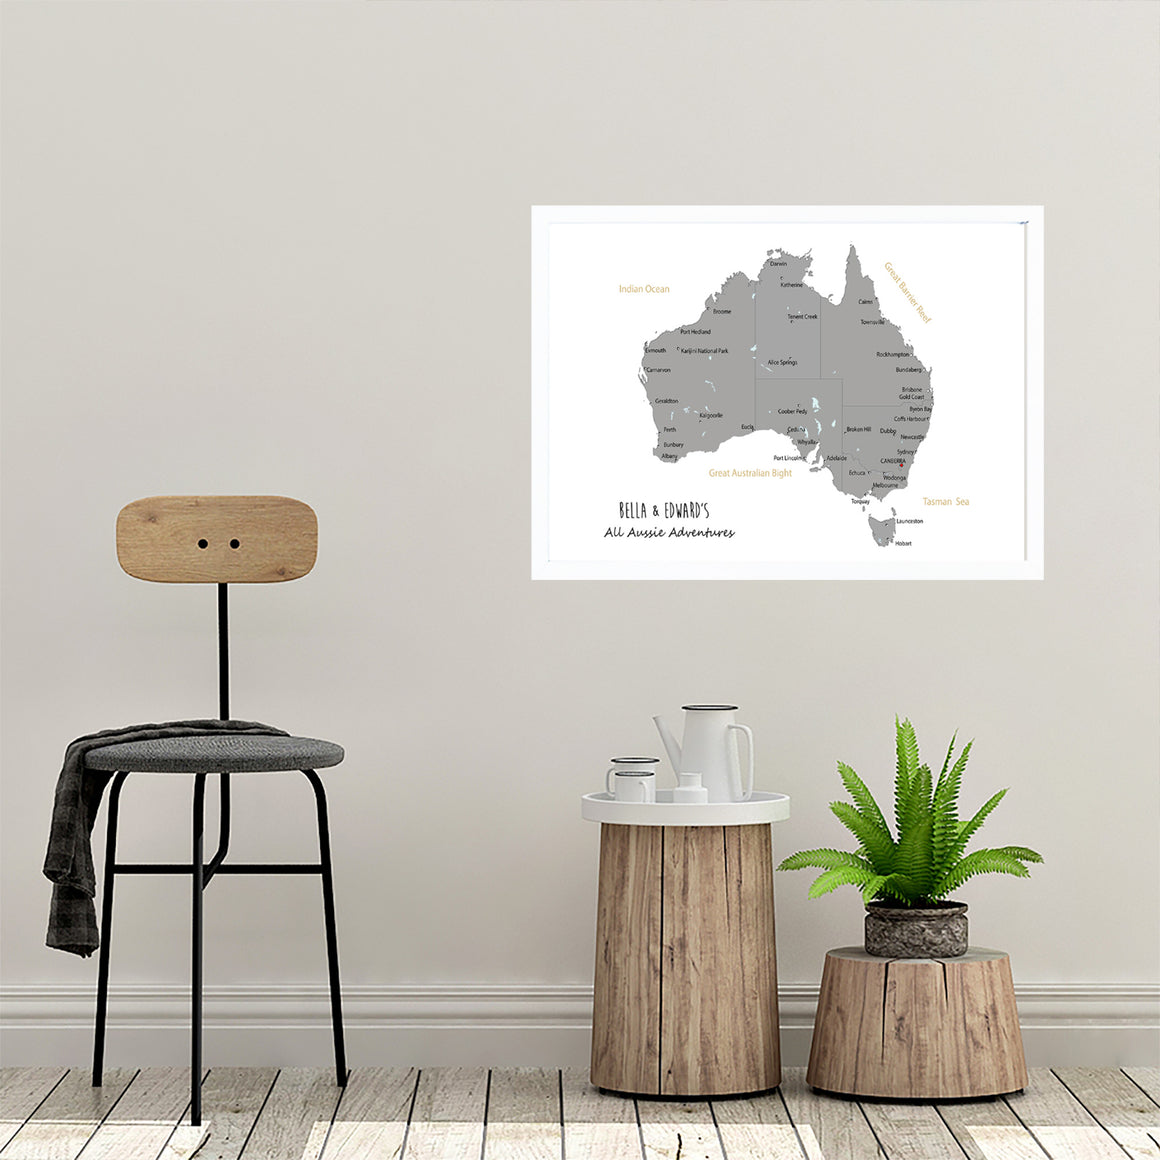 Personalised Framed AUSTRALIA Map Pinboard, Australian Map Wall Art, Travel Map Wall Art, Framed Pin Board